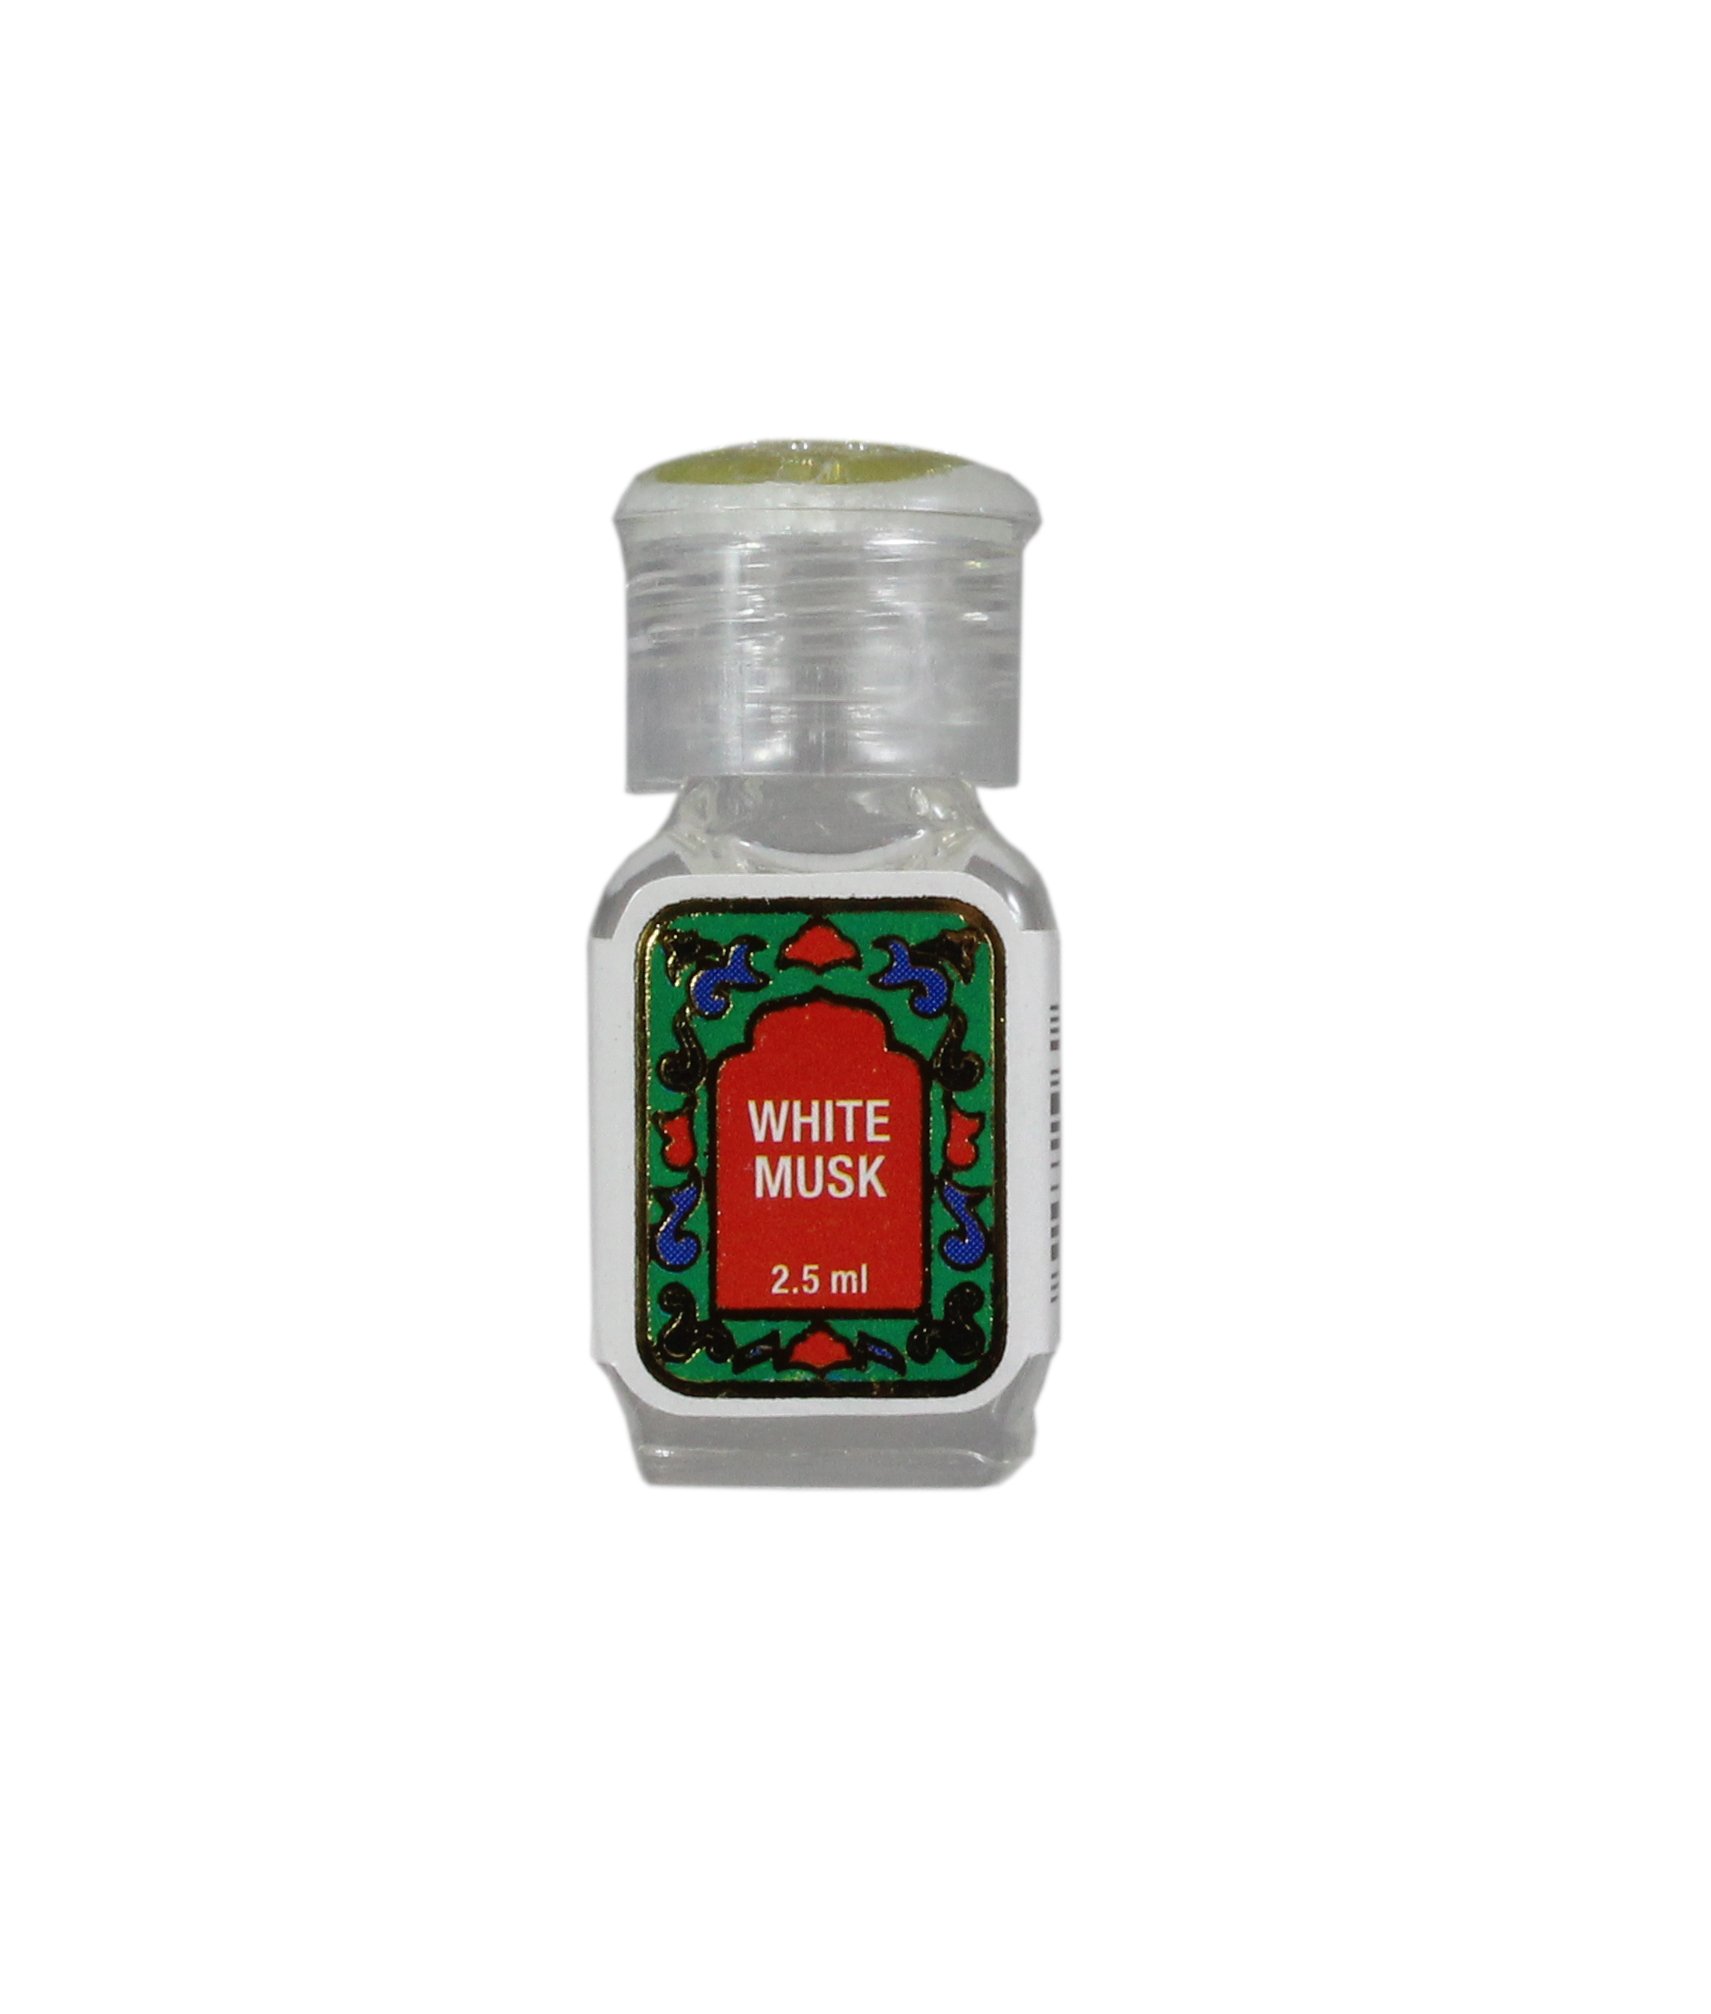 Nemat White Musk Fragrance - Shop Essential Oils at H-E-B